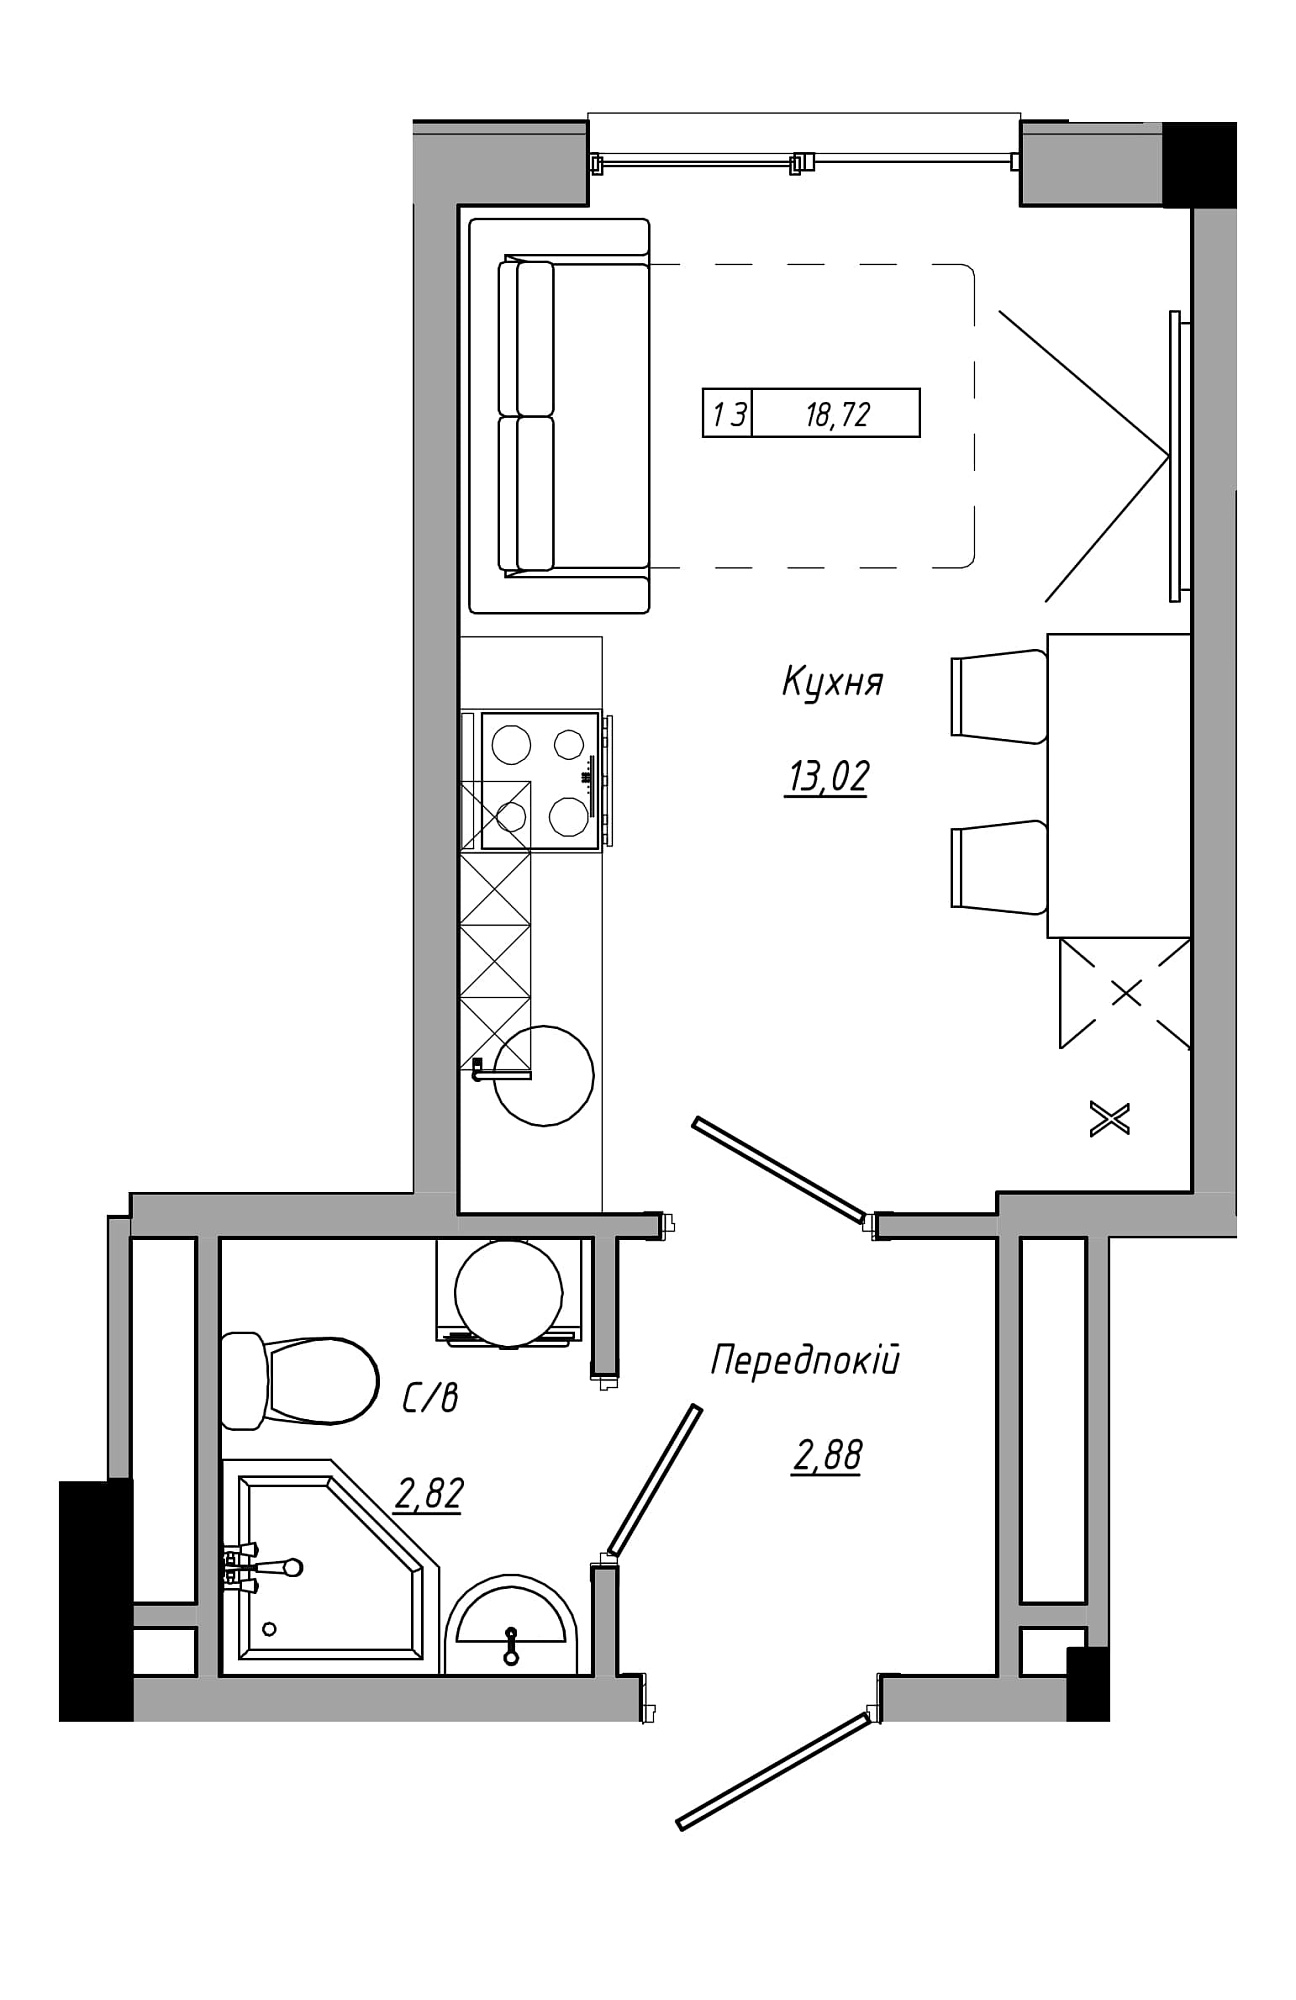 Планировка Smart-квартира площей 18.72м2, AB-21-12/00011.